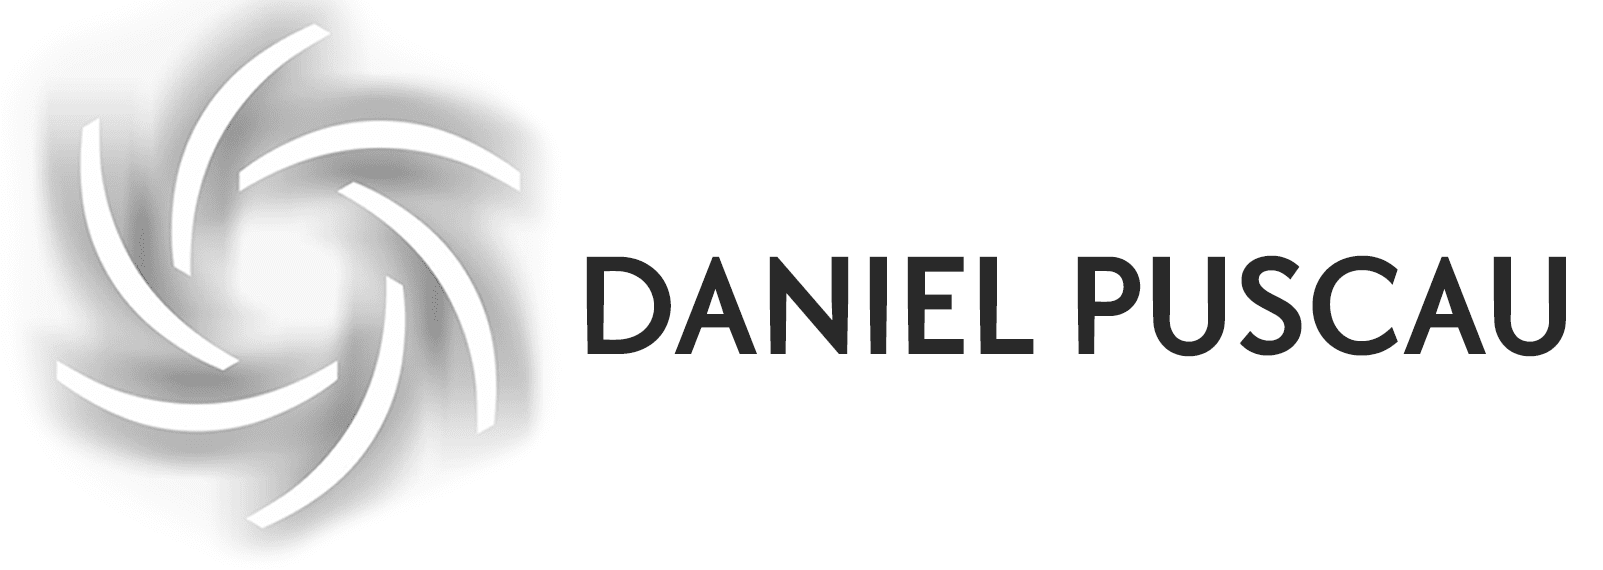 Daniel Puscau